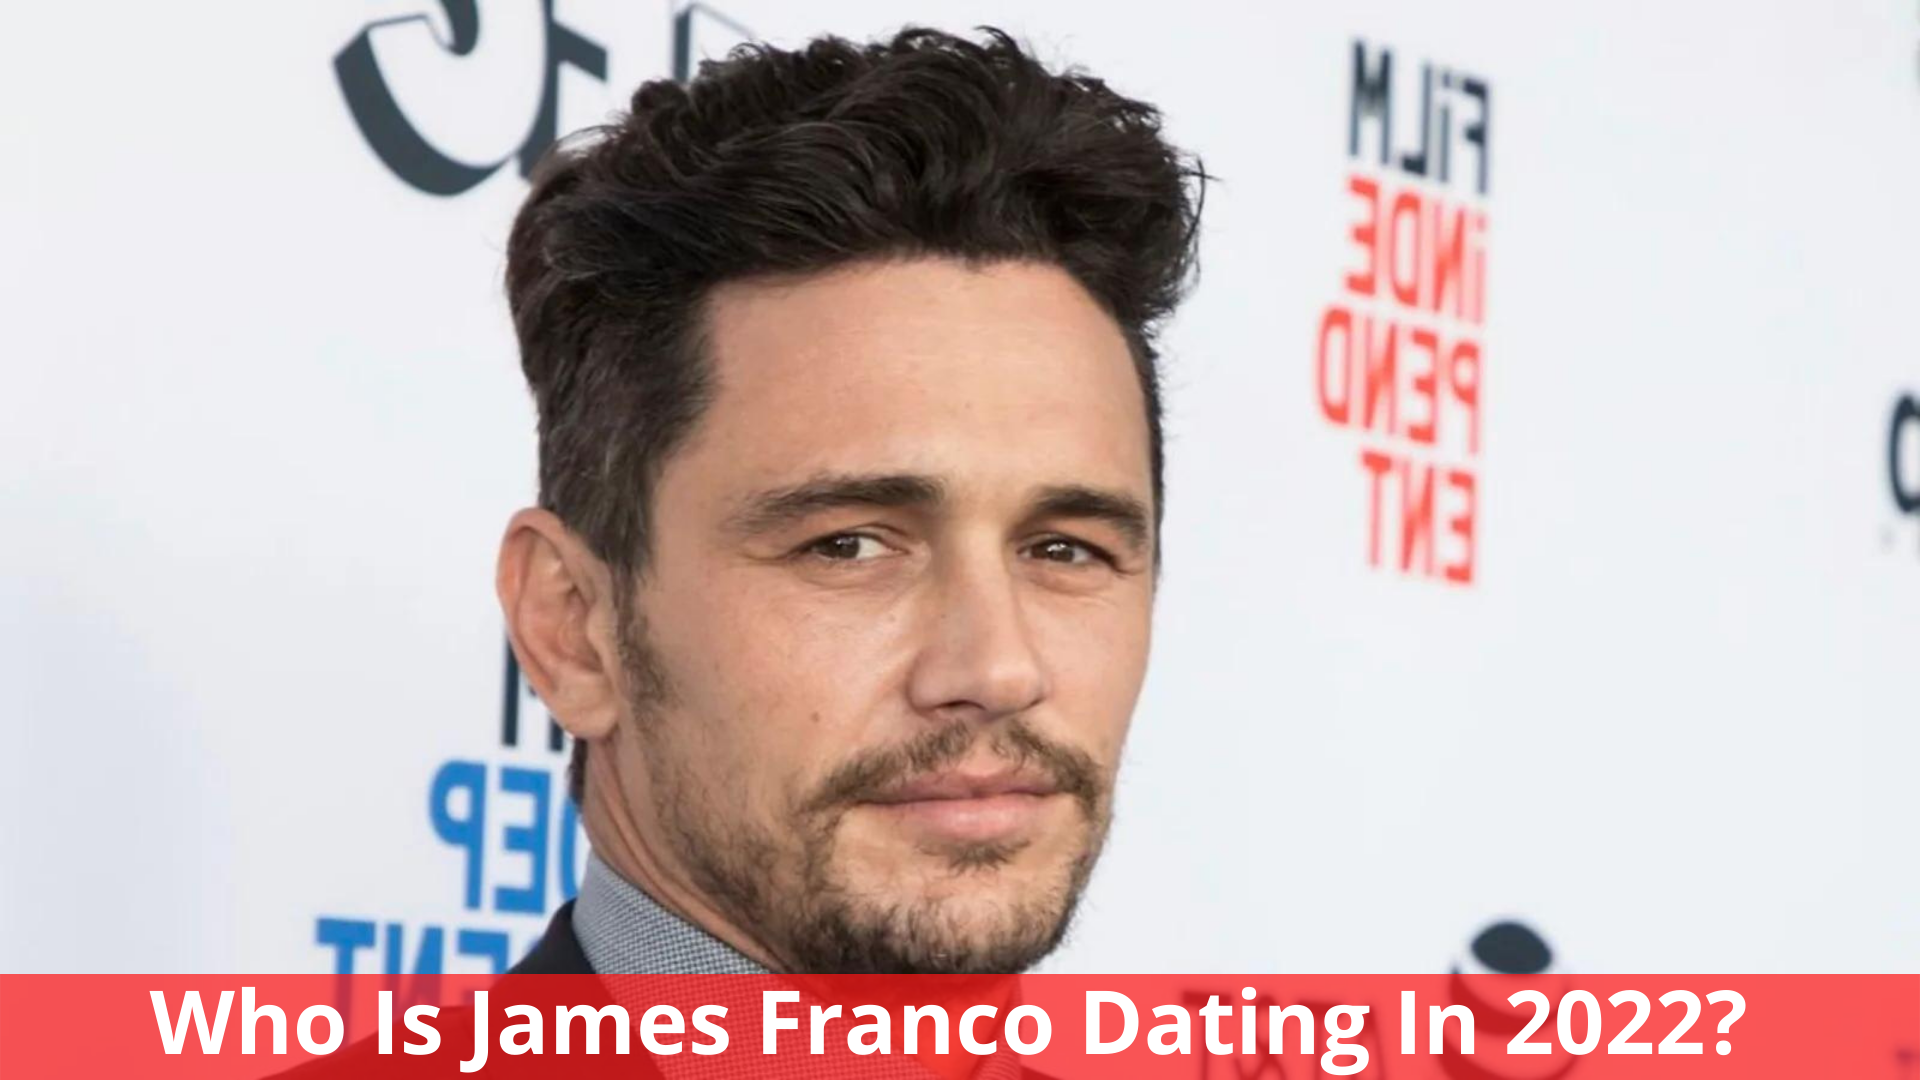 James franco dating